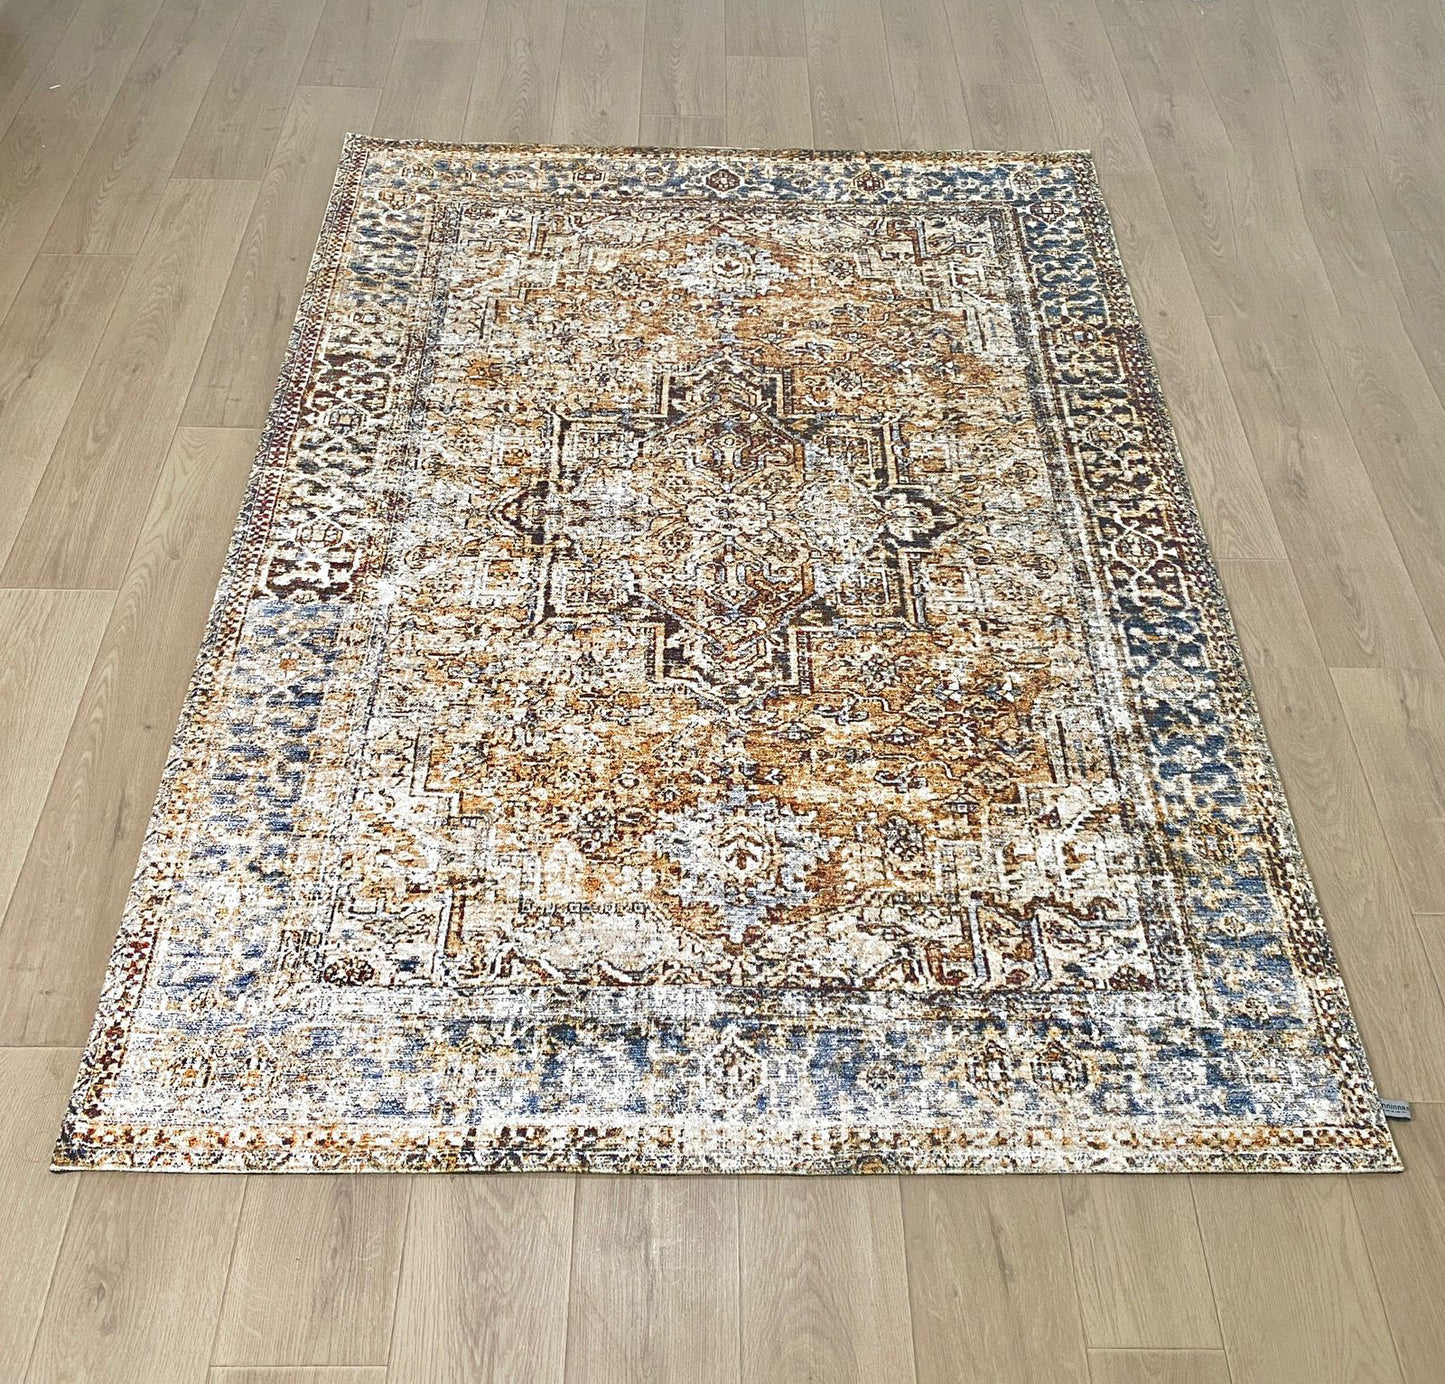 Karpet Tradisional (BR-T-0003) - Brown,Cream,Grey